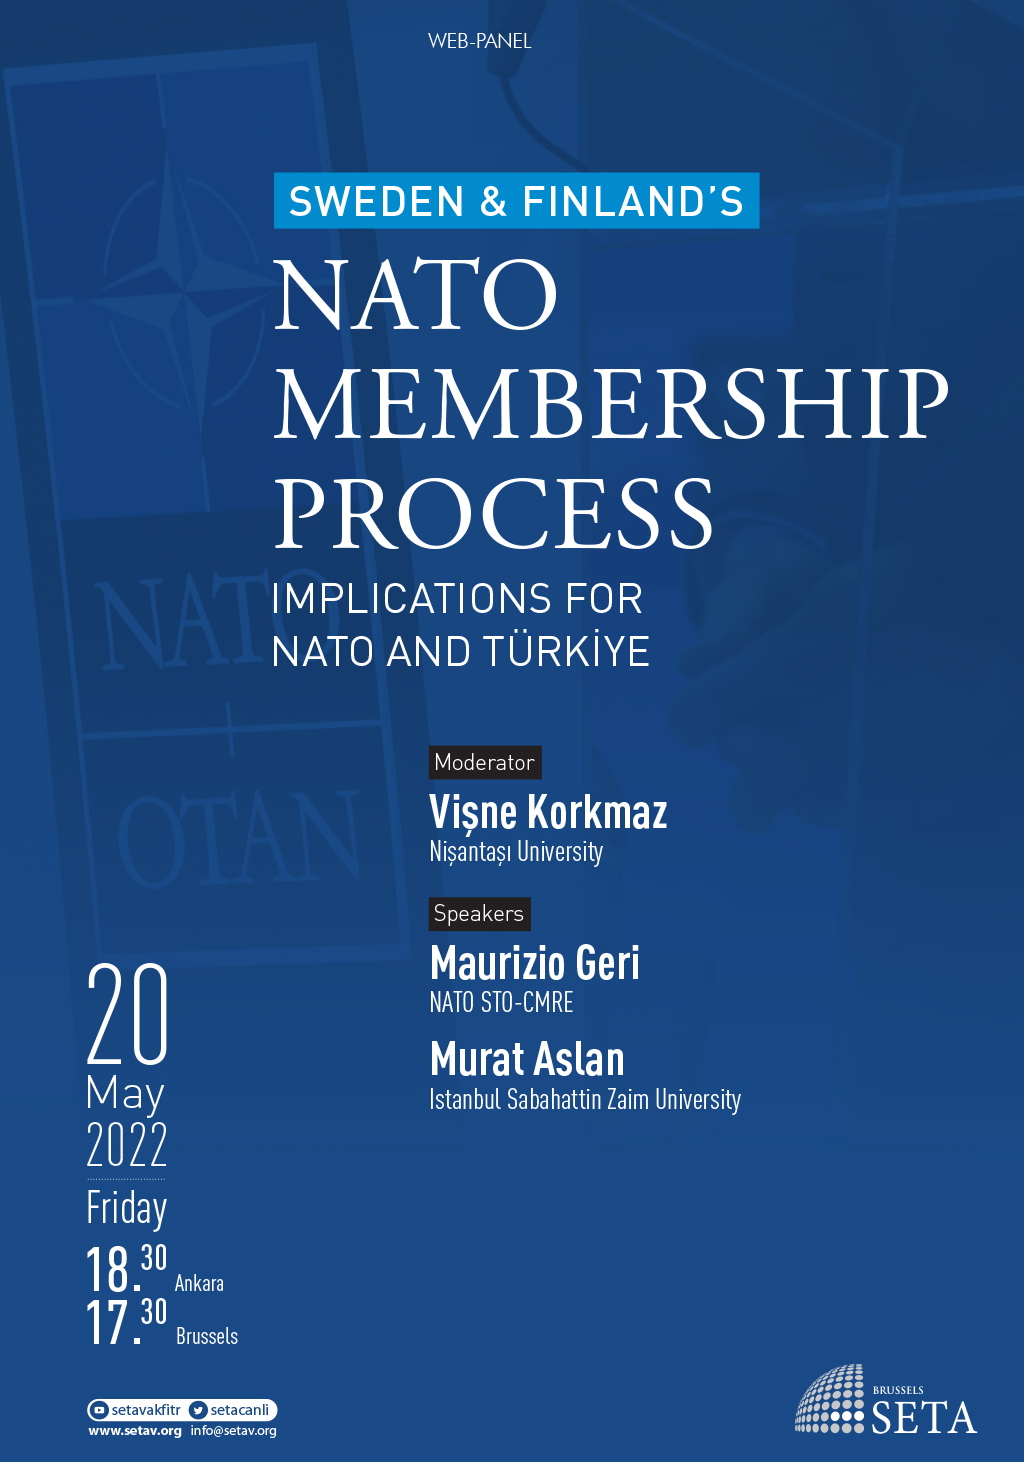 Web Panel: Sweden & Finland’s NATO Membership Process | Implications for NATO and Türkiye